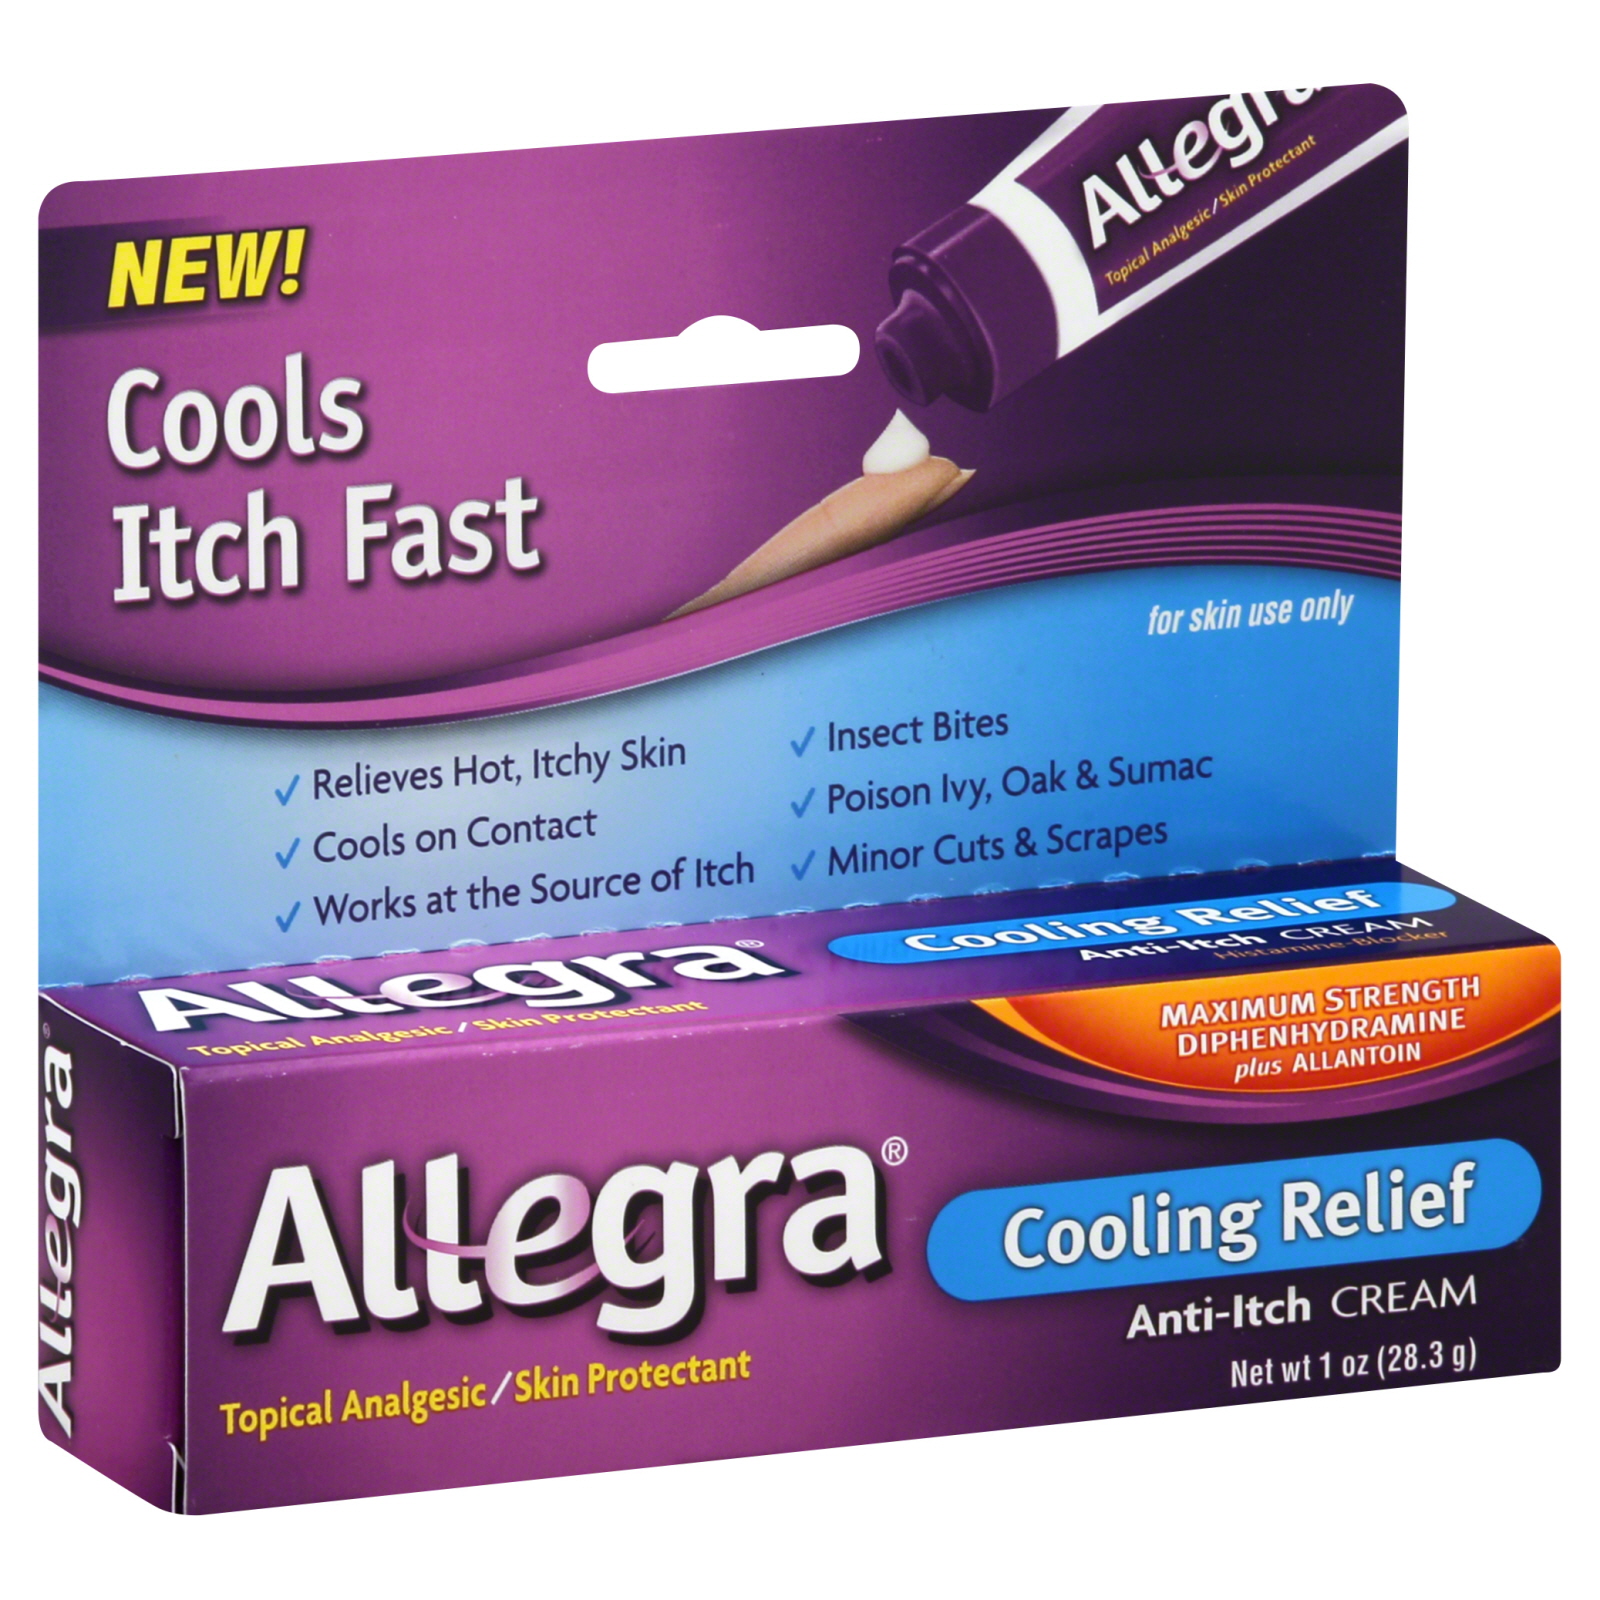 Allegra Cooling Relief Anti-Itch Cream, 1 oz